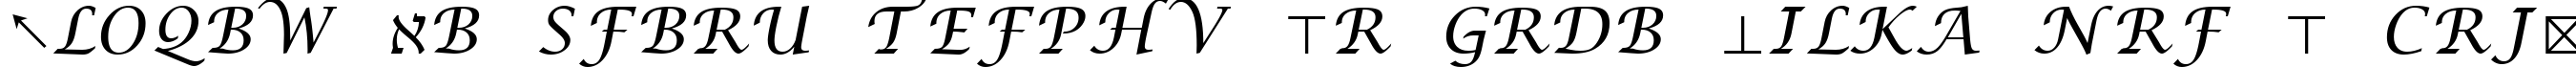 Пример написания шрифтом Lucida Bright Math Symbol текста на французском